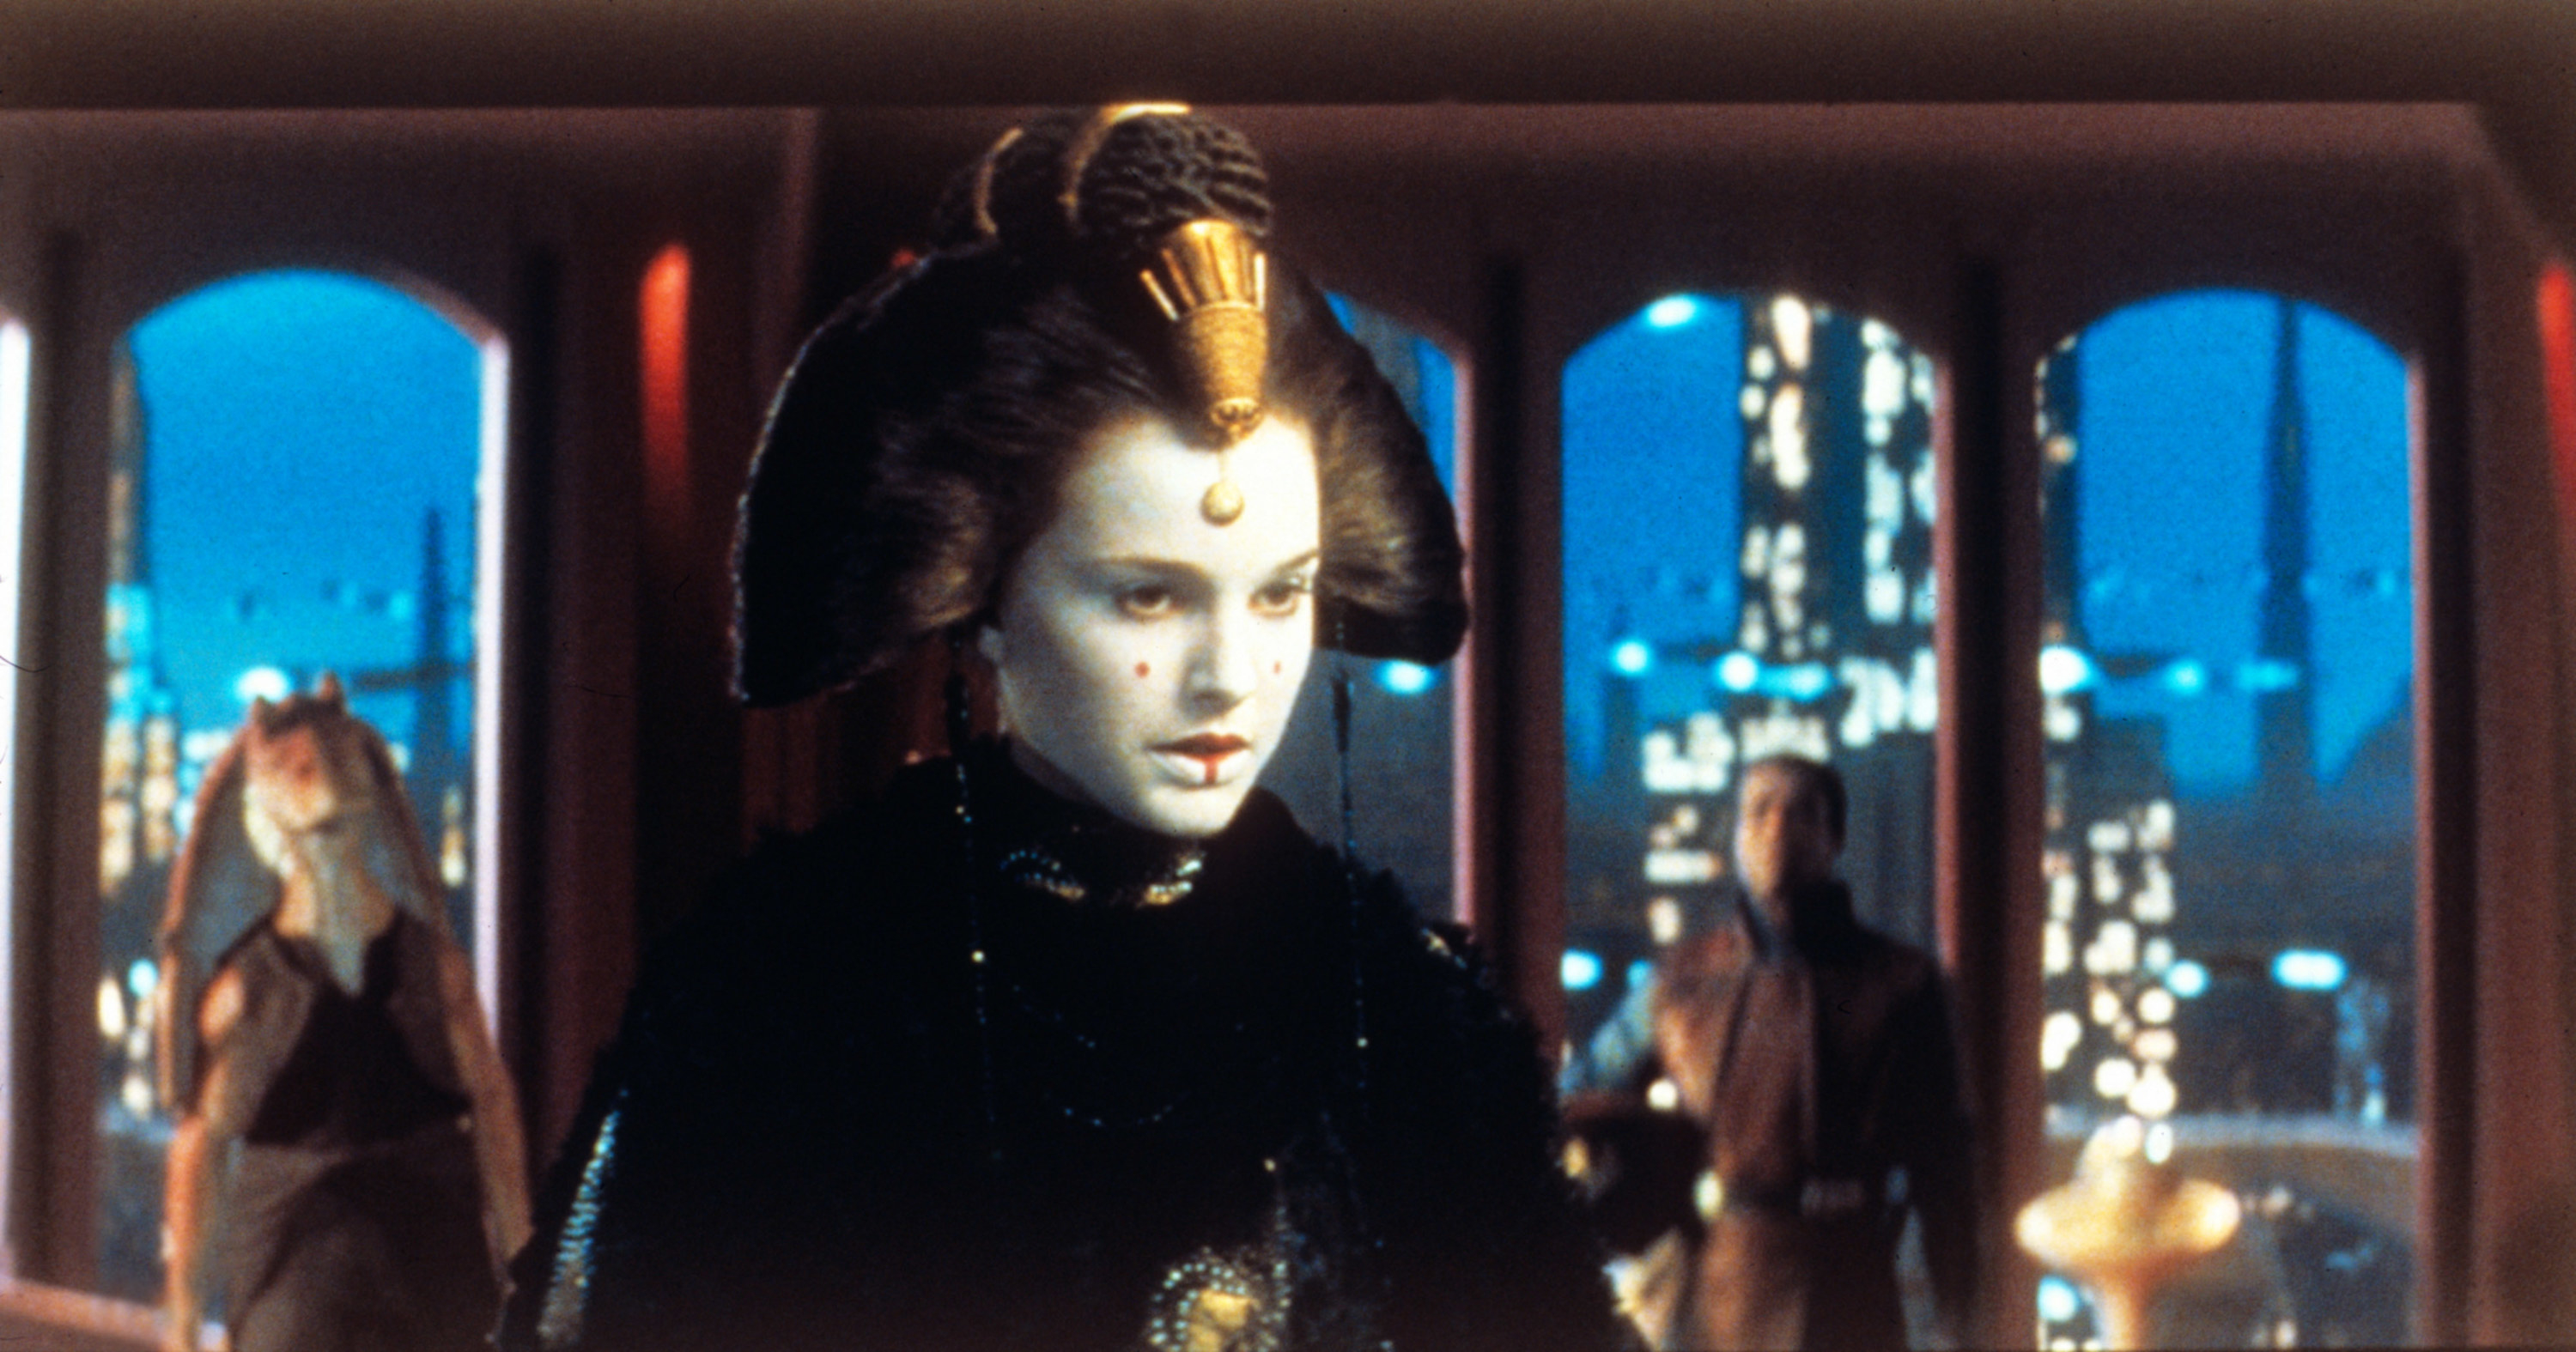 Natalie Portman in Star Wars: Episode 1 - The Phantom Menace